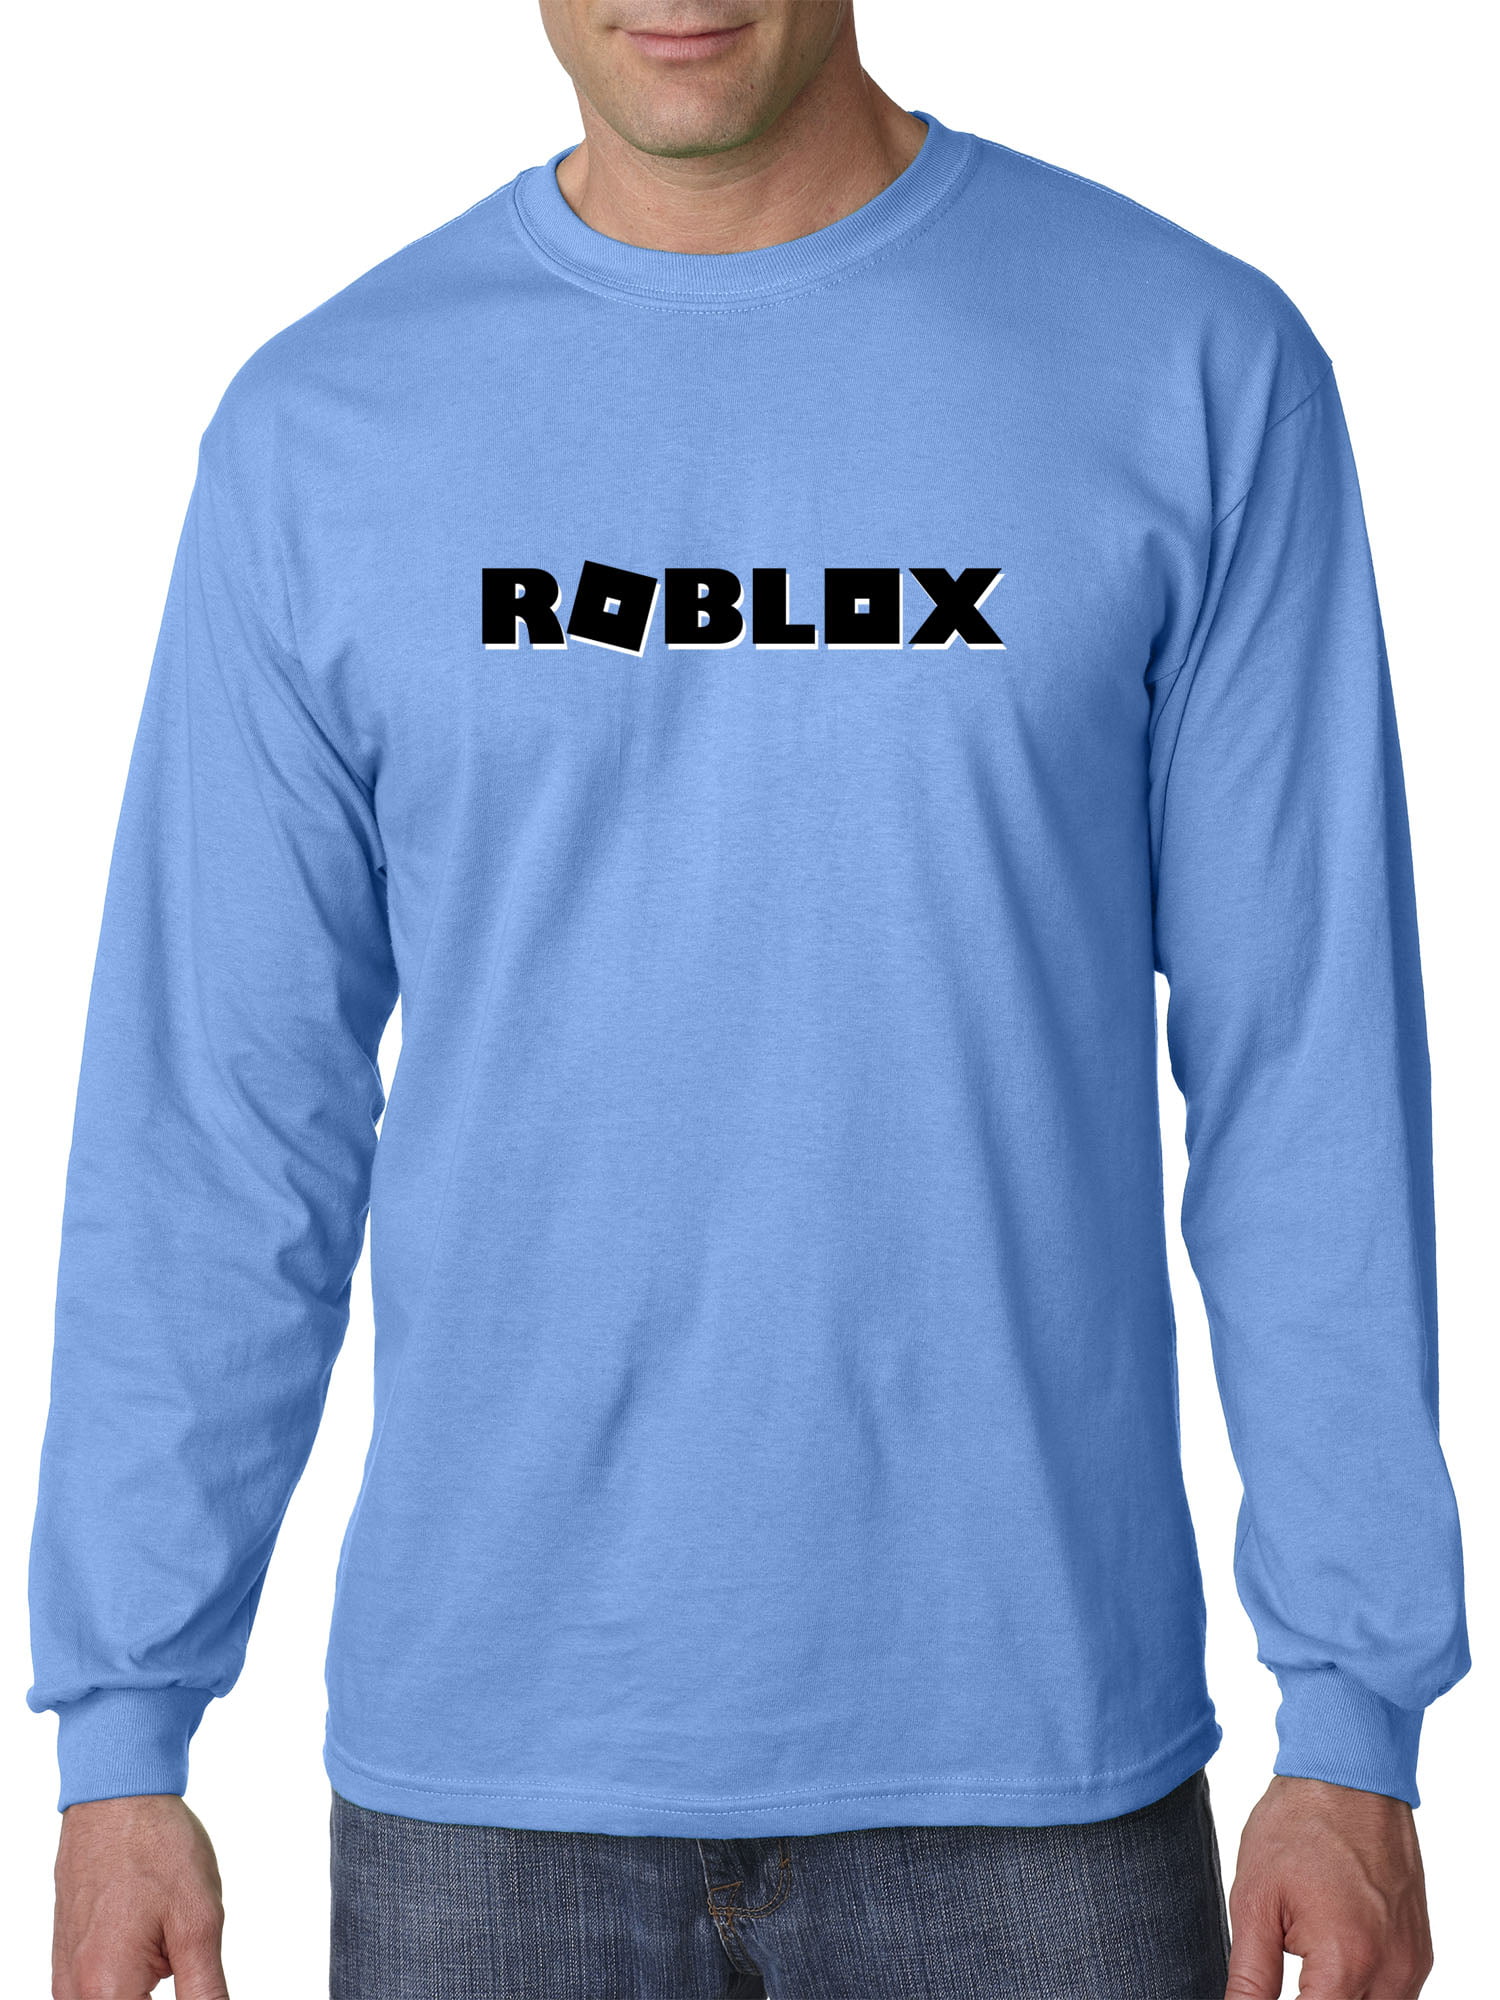 Roblox T Shirt Blue Shop Clothing Shoes Online - long sleeve shirt roblox